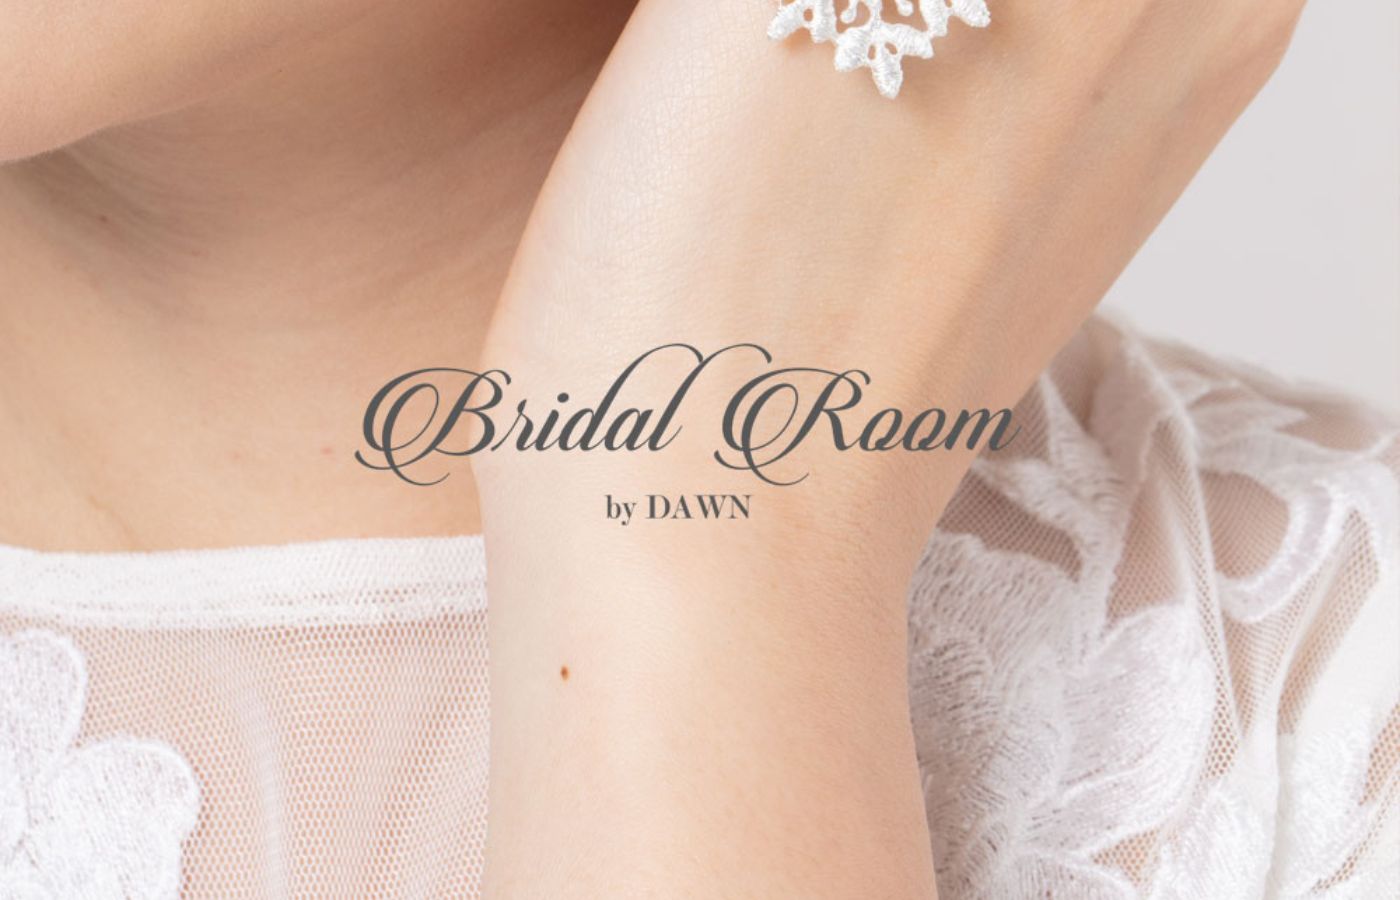 Debut of Bridal Room